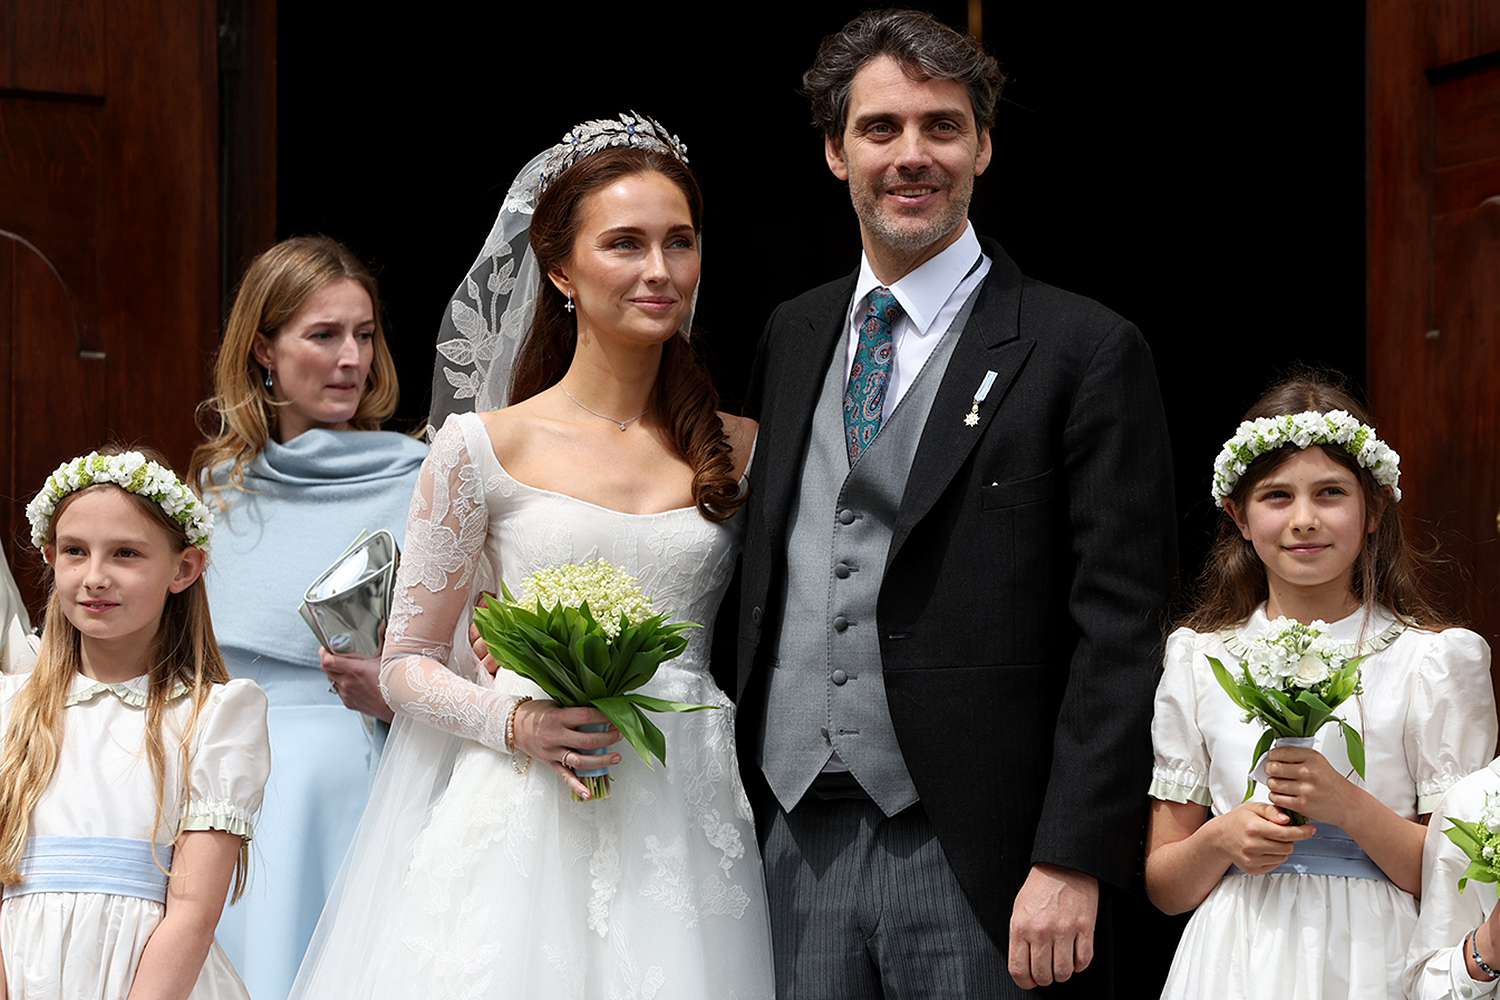 Prince Ludwig of Bavaria Marries Sophie Evekink in Munich, Germany